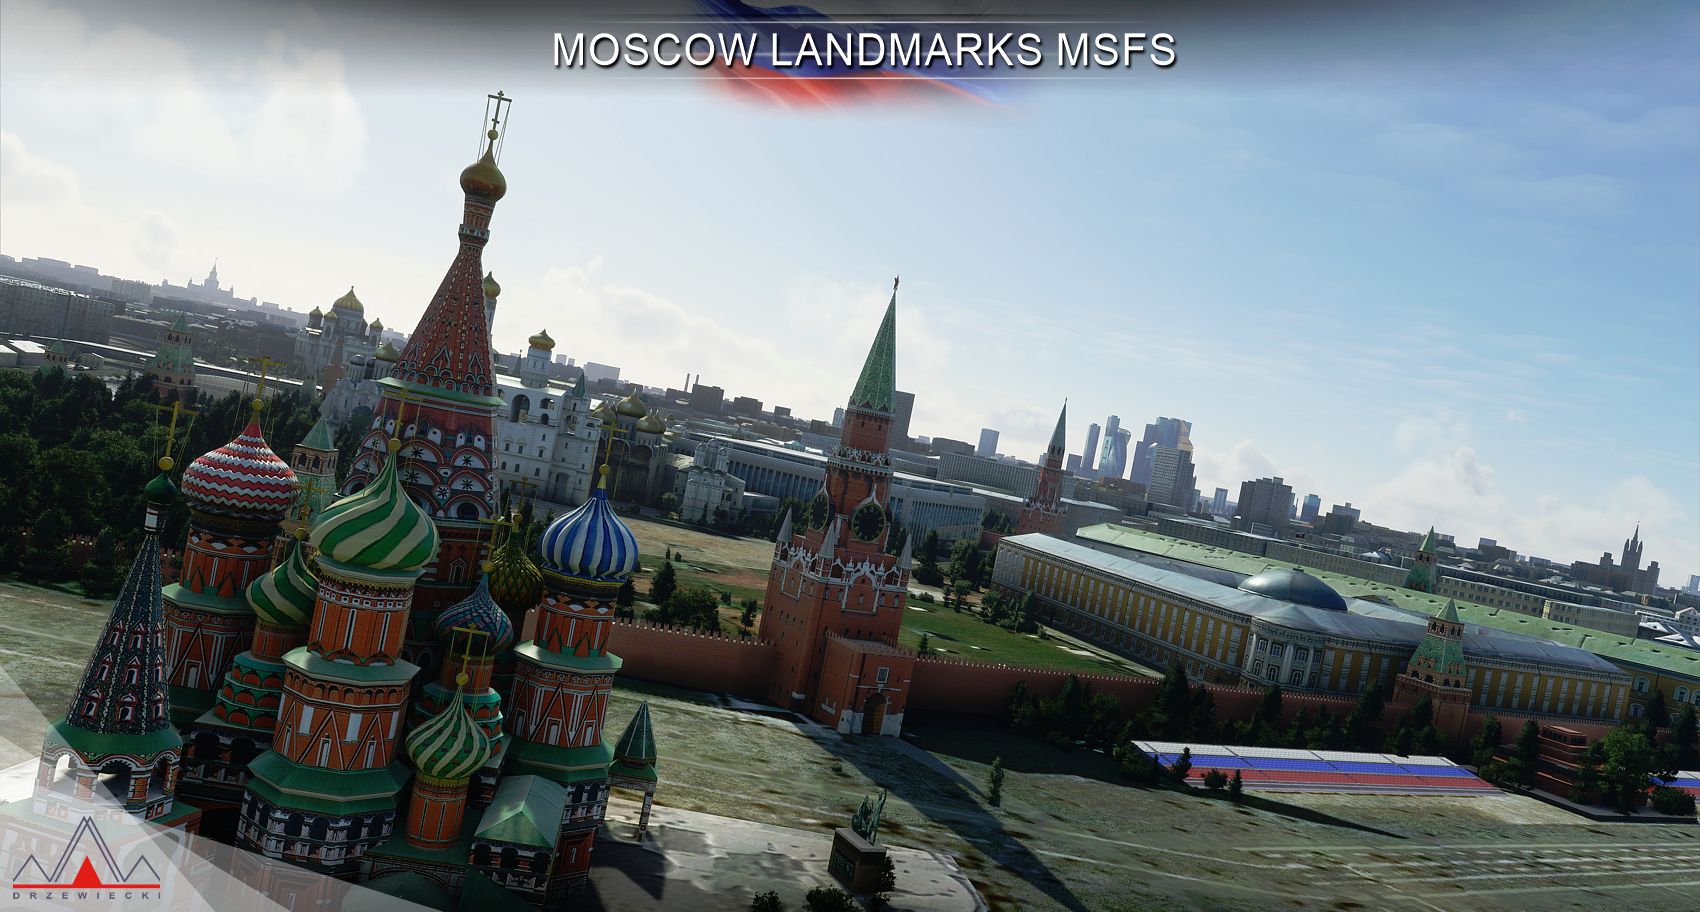 MSFS Moscow Landmarks